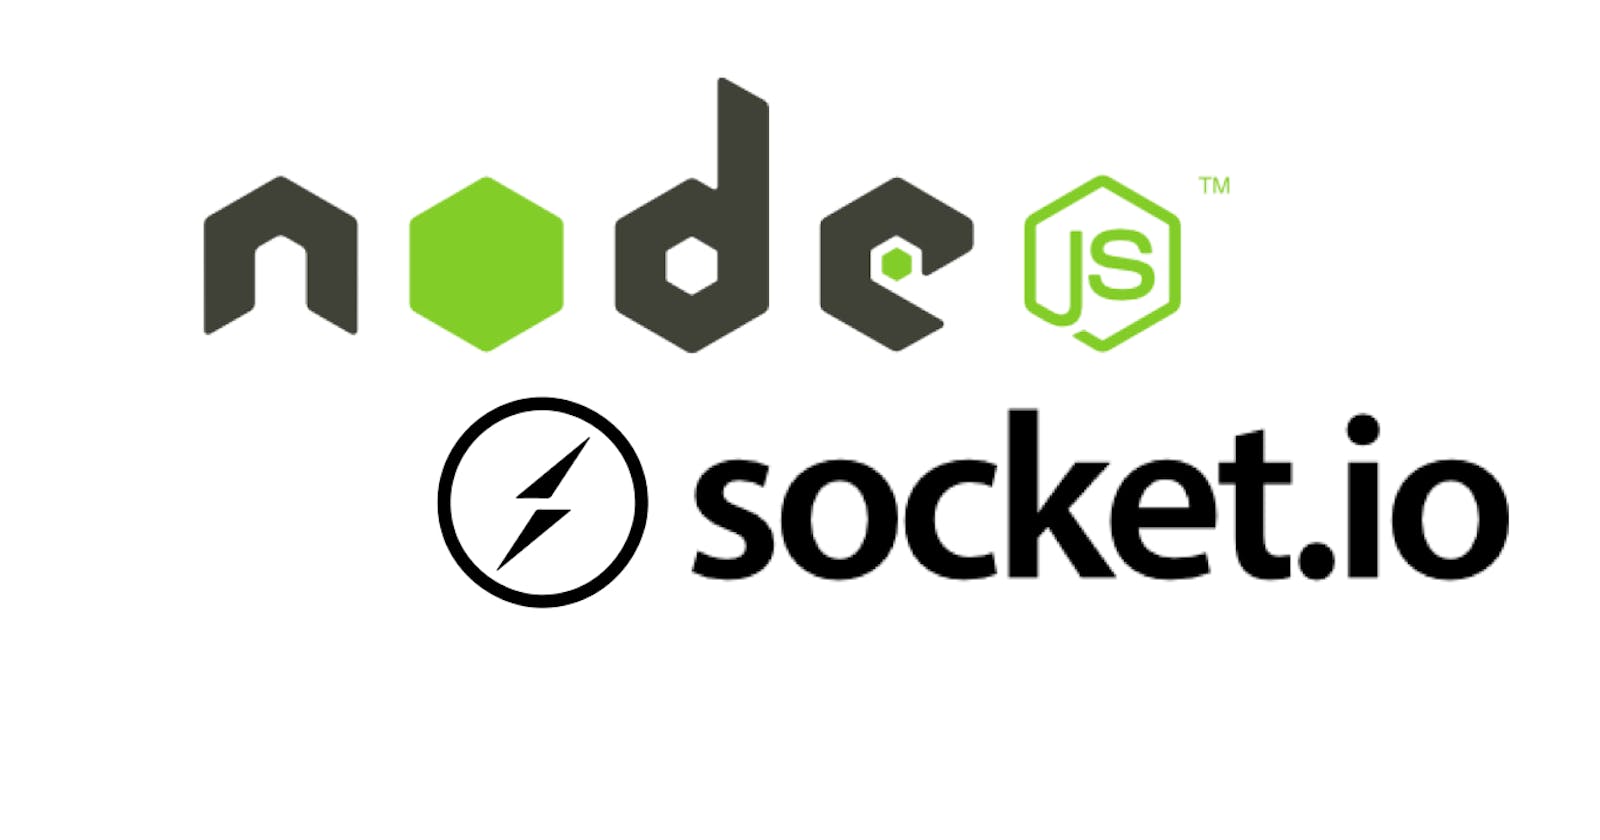 Building a real-time scalable chat app using  Socket.io, node js, Redis, Kafka, MongoDB, and react